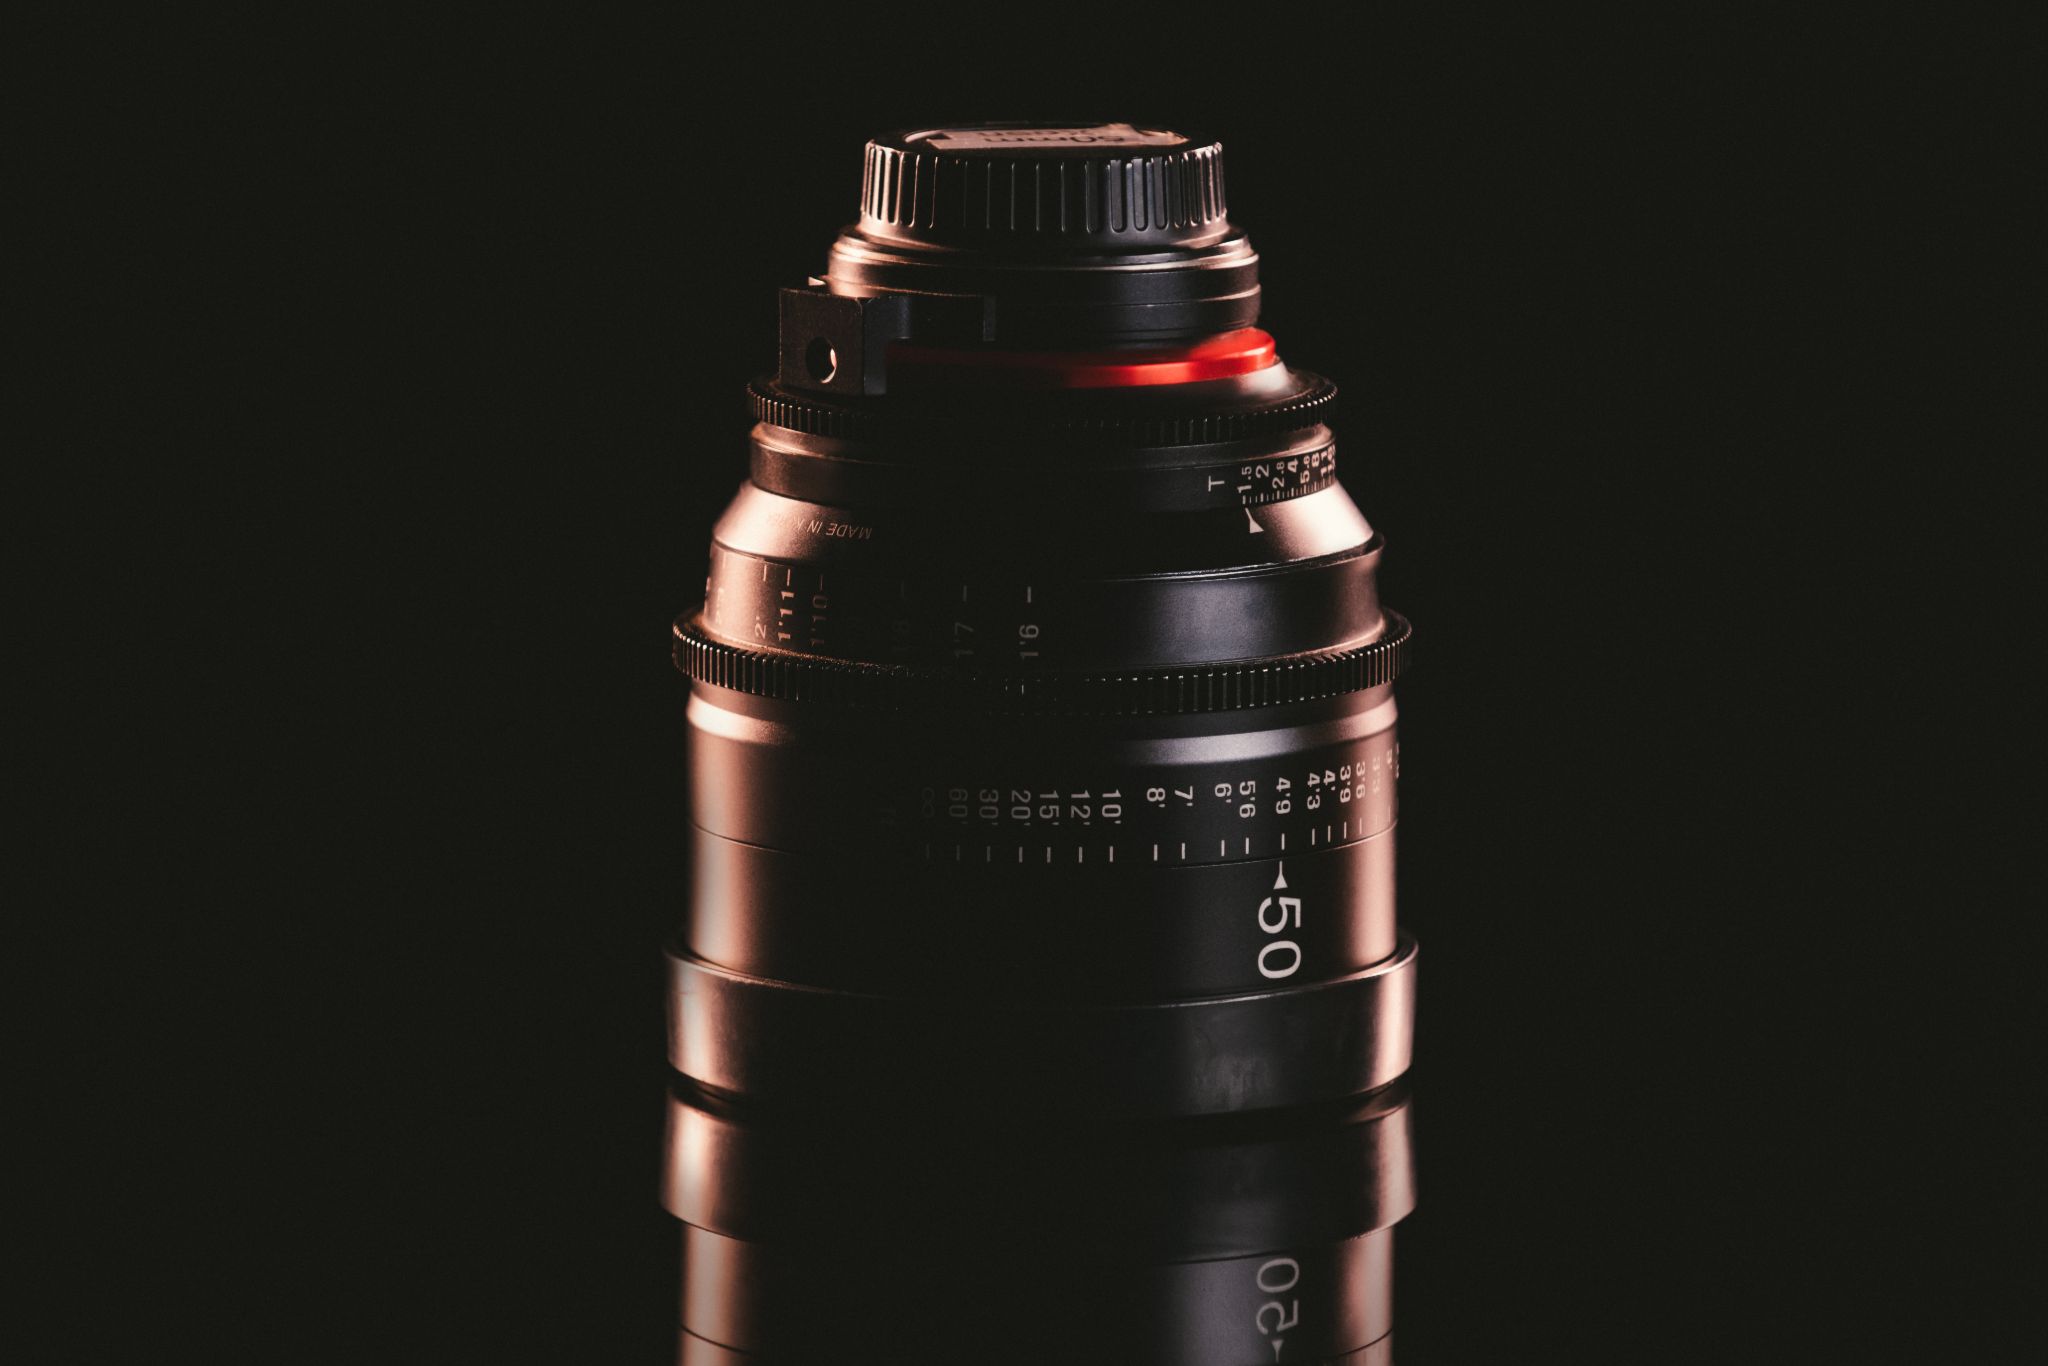 Closeup of a camera lens on display